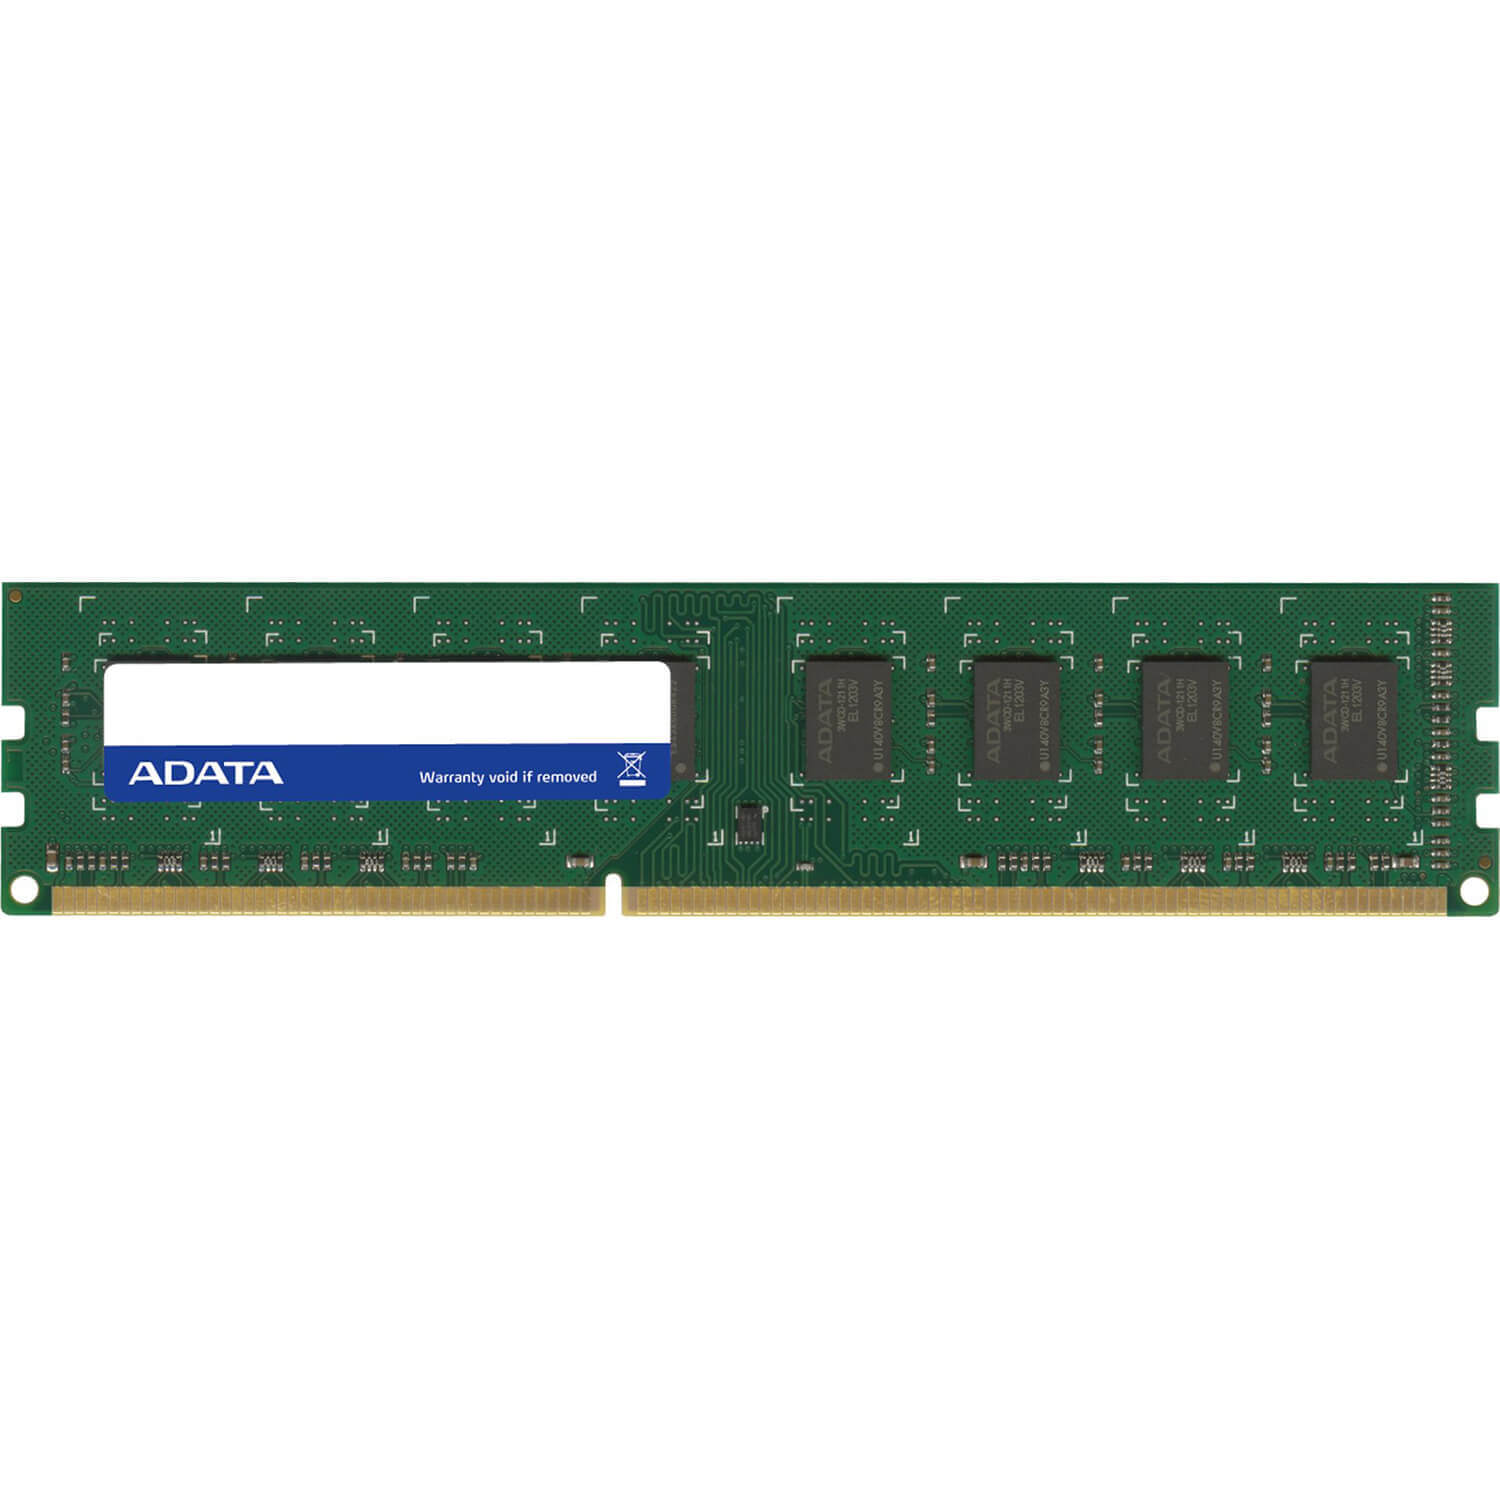  Memorie A-Data AD3U160022G11-R, 2GB, DDR3, 1600MHz, CL11 